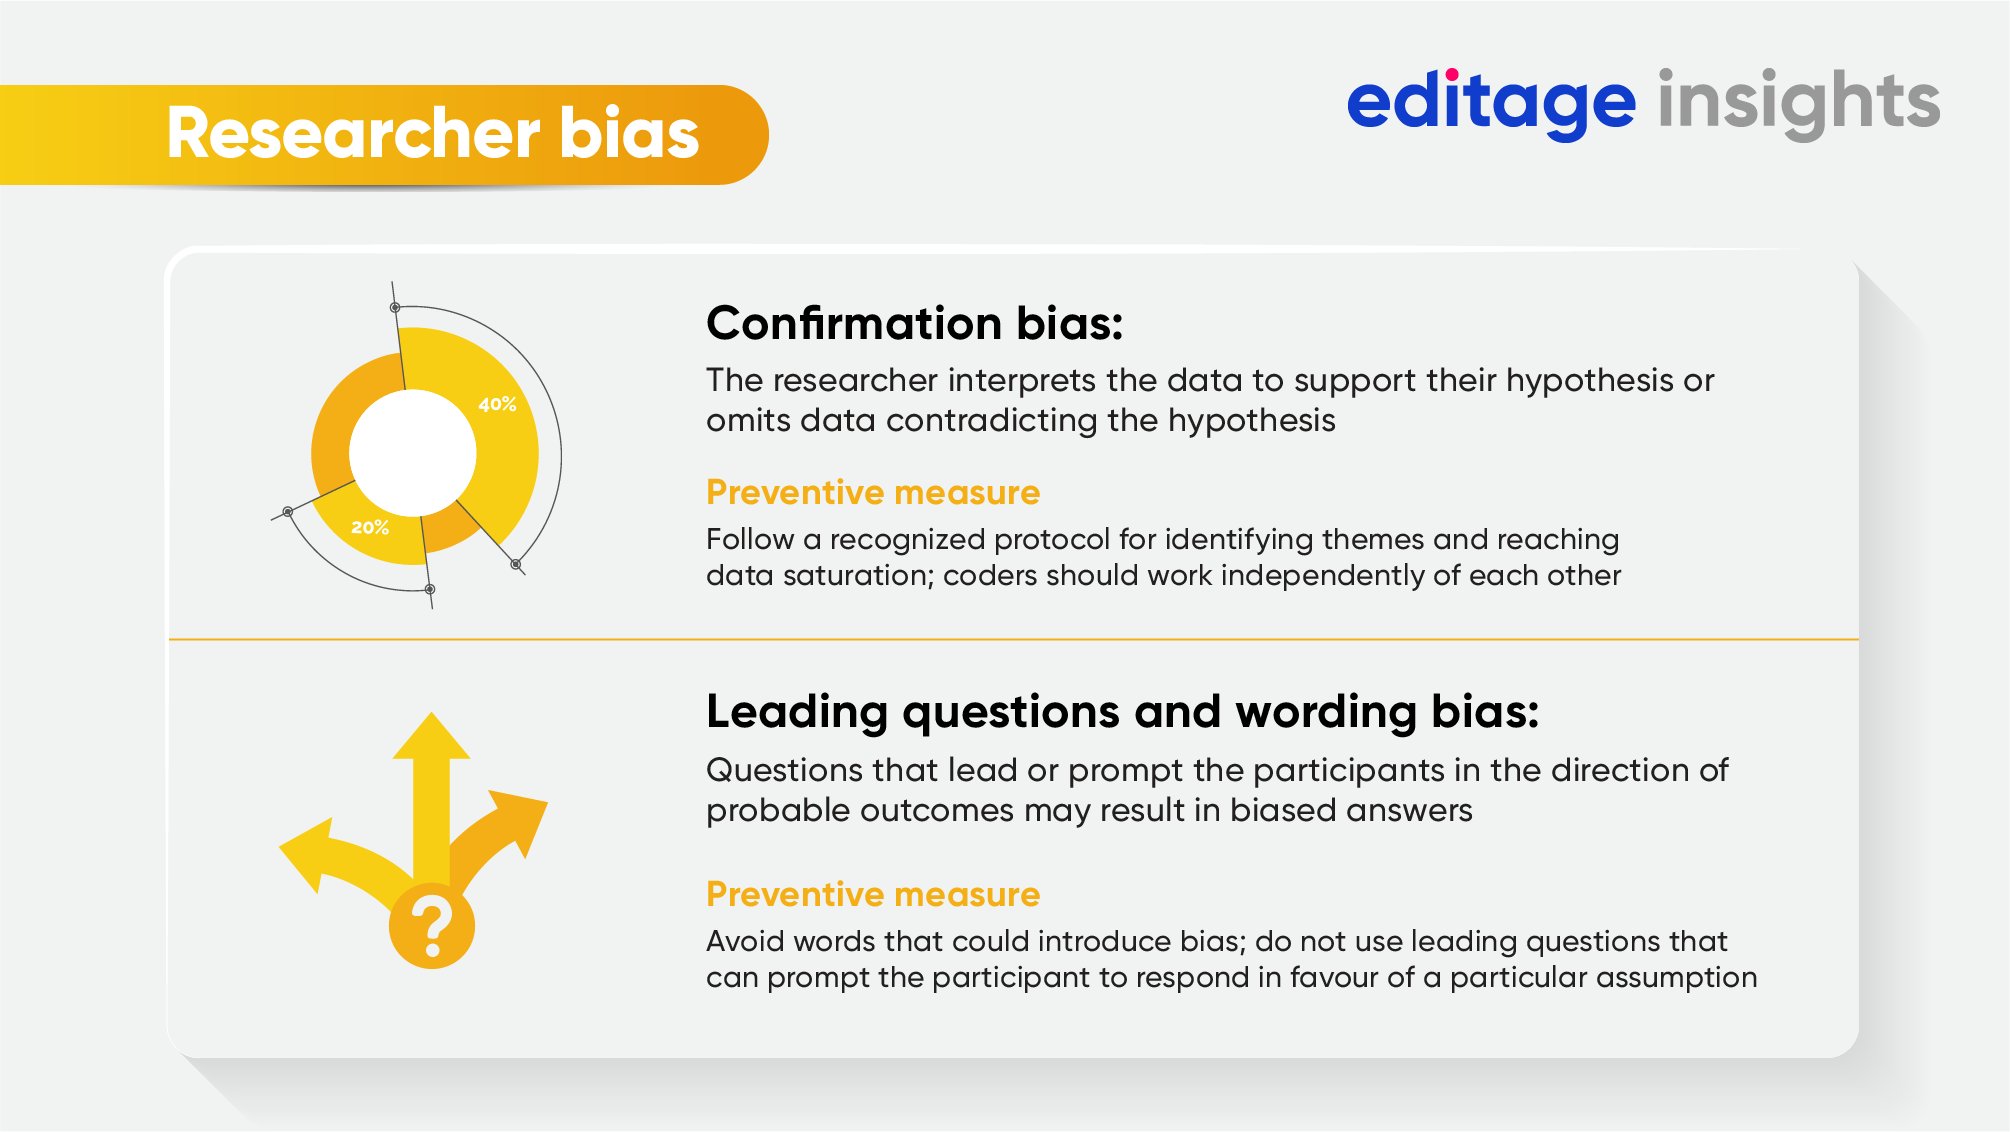 qualitative research and bias